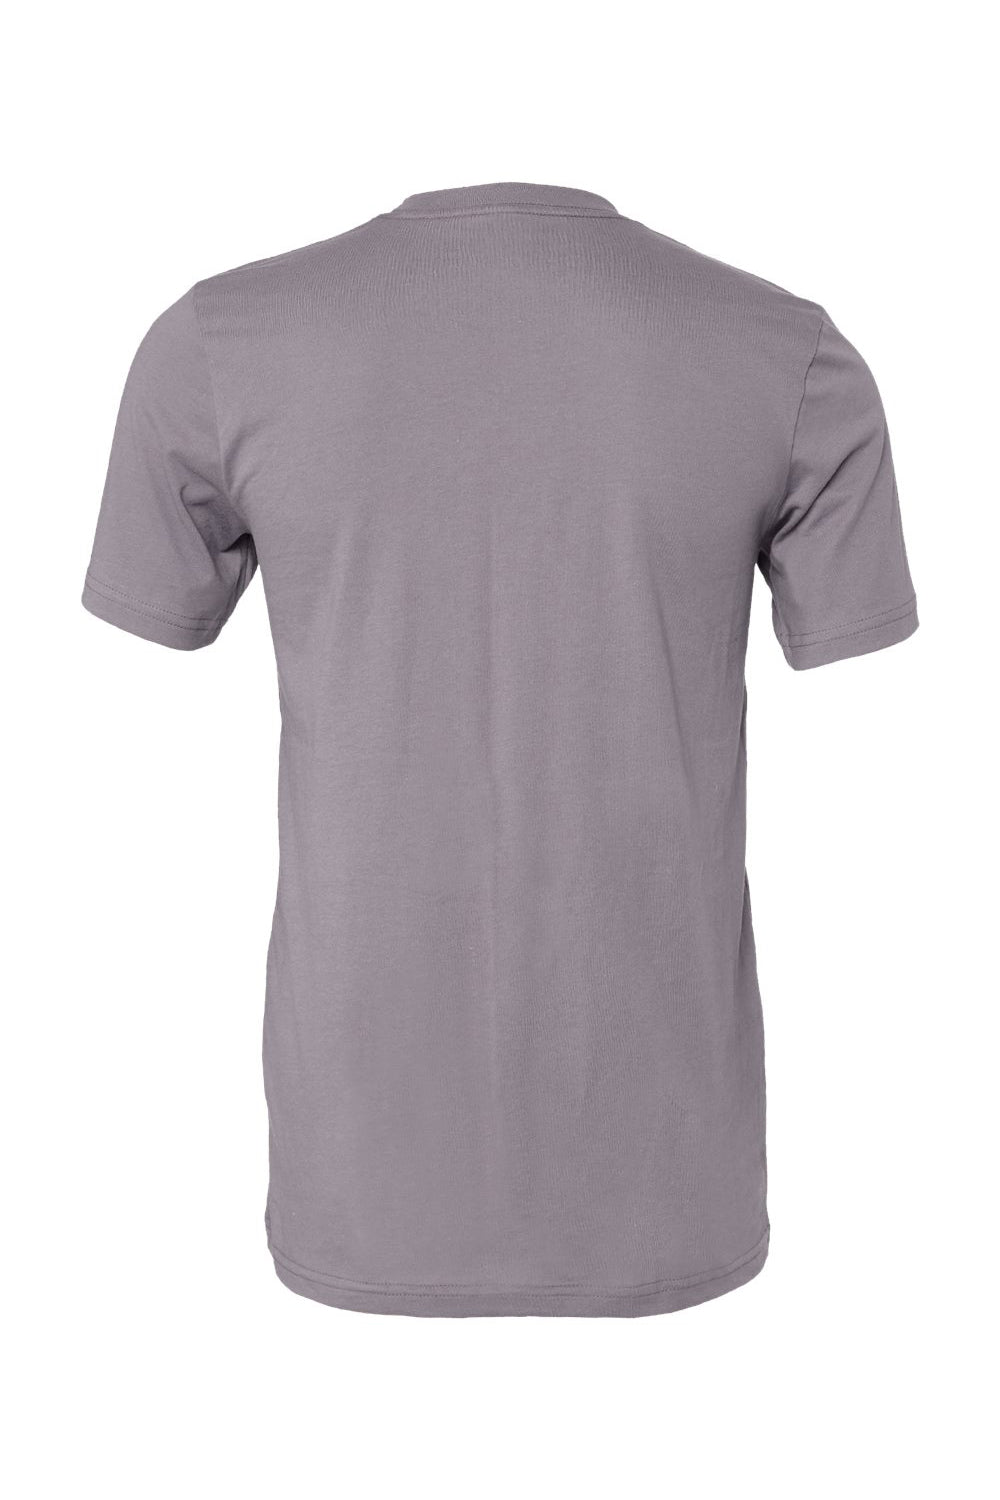 Bella + Canvas BC3001/3001C Mens Jersey Short Sleeve Crewneck T-Shirt Storm Grey Flat Back